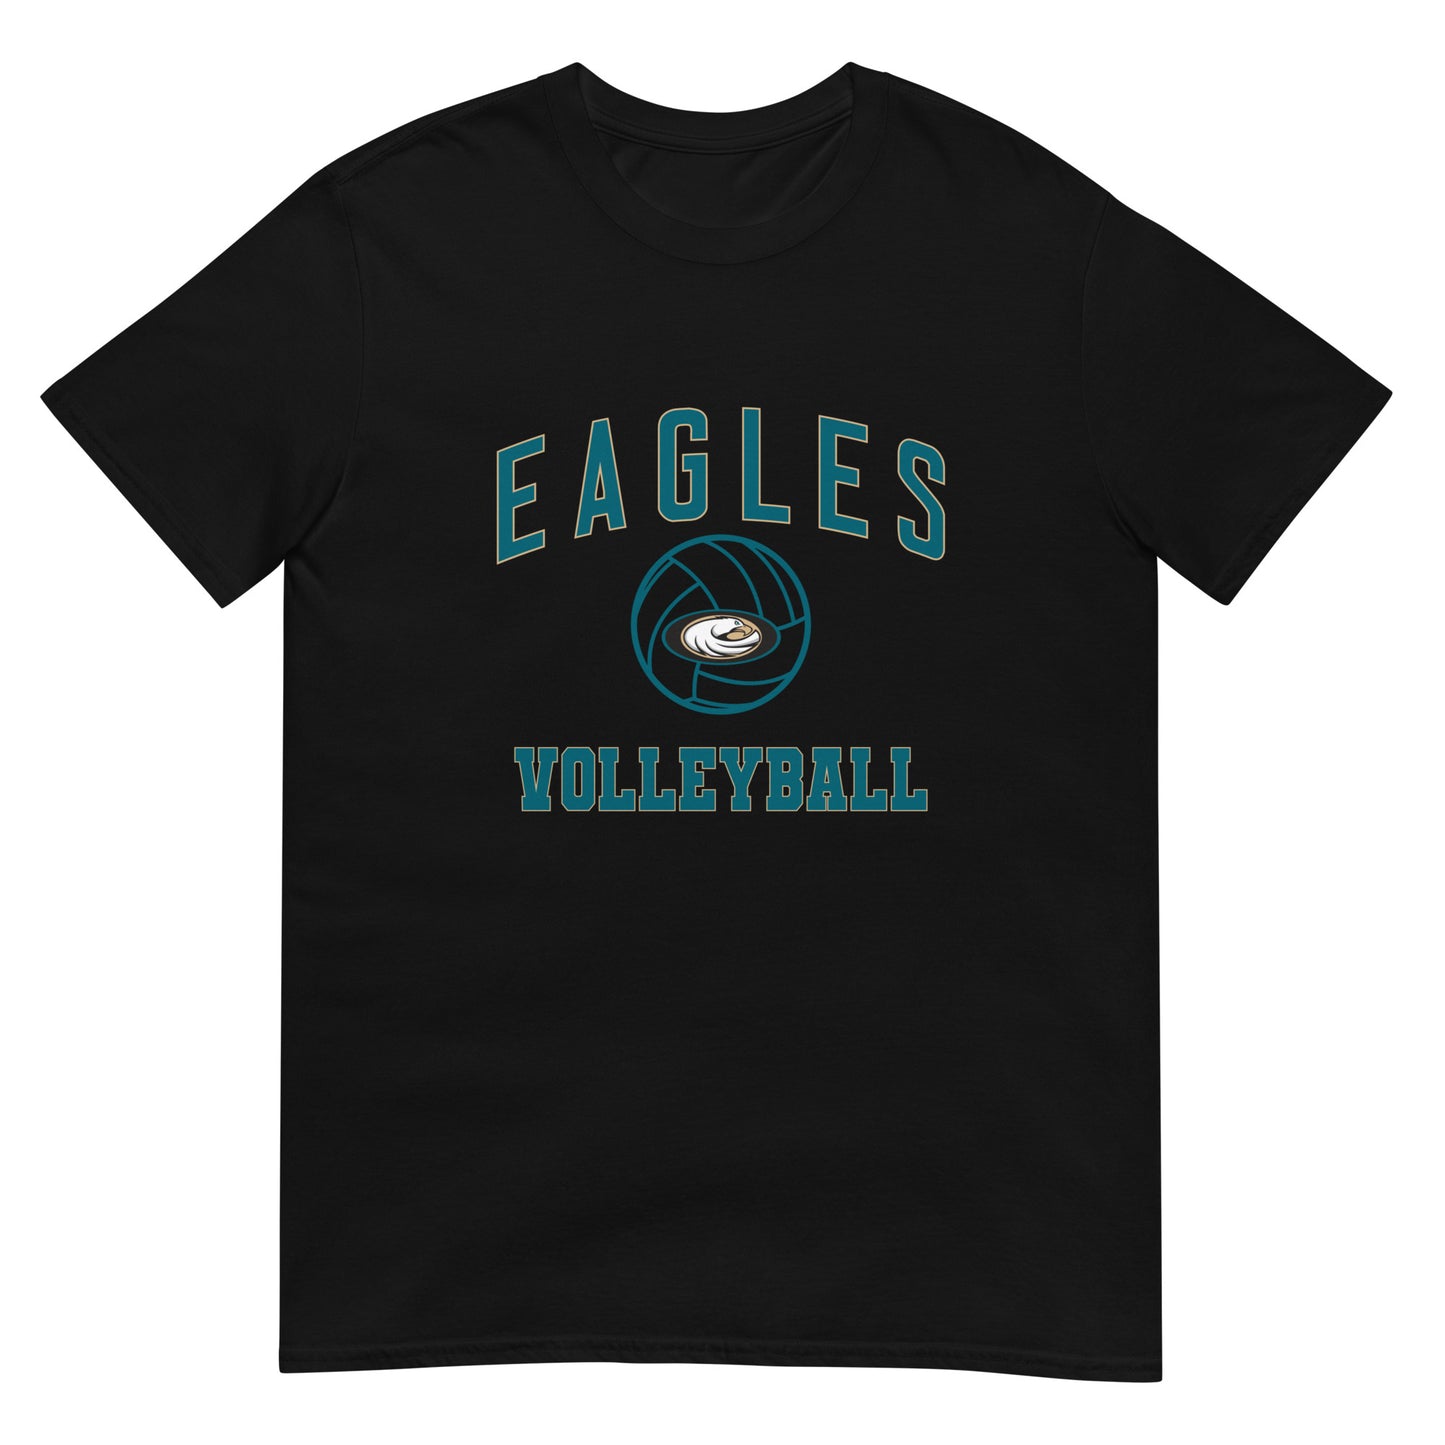 Eagles Volleyball Short-Sleeve Unisex T-Shirt